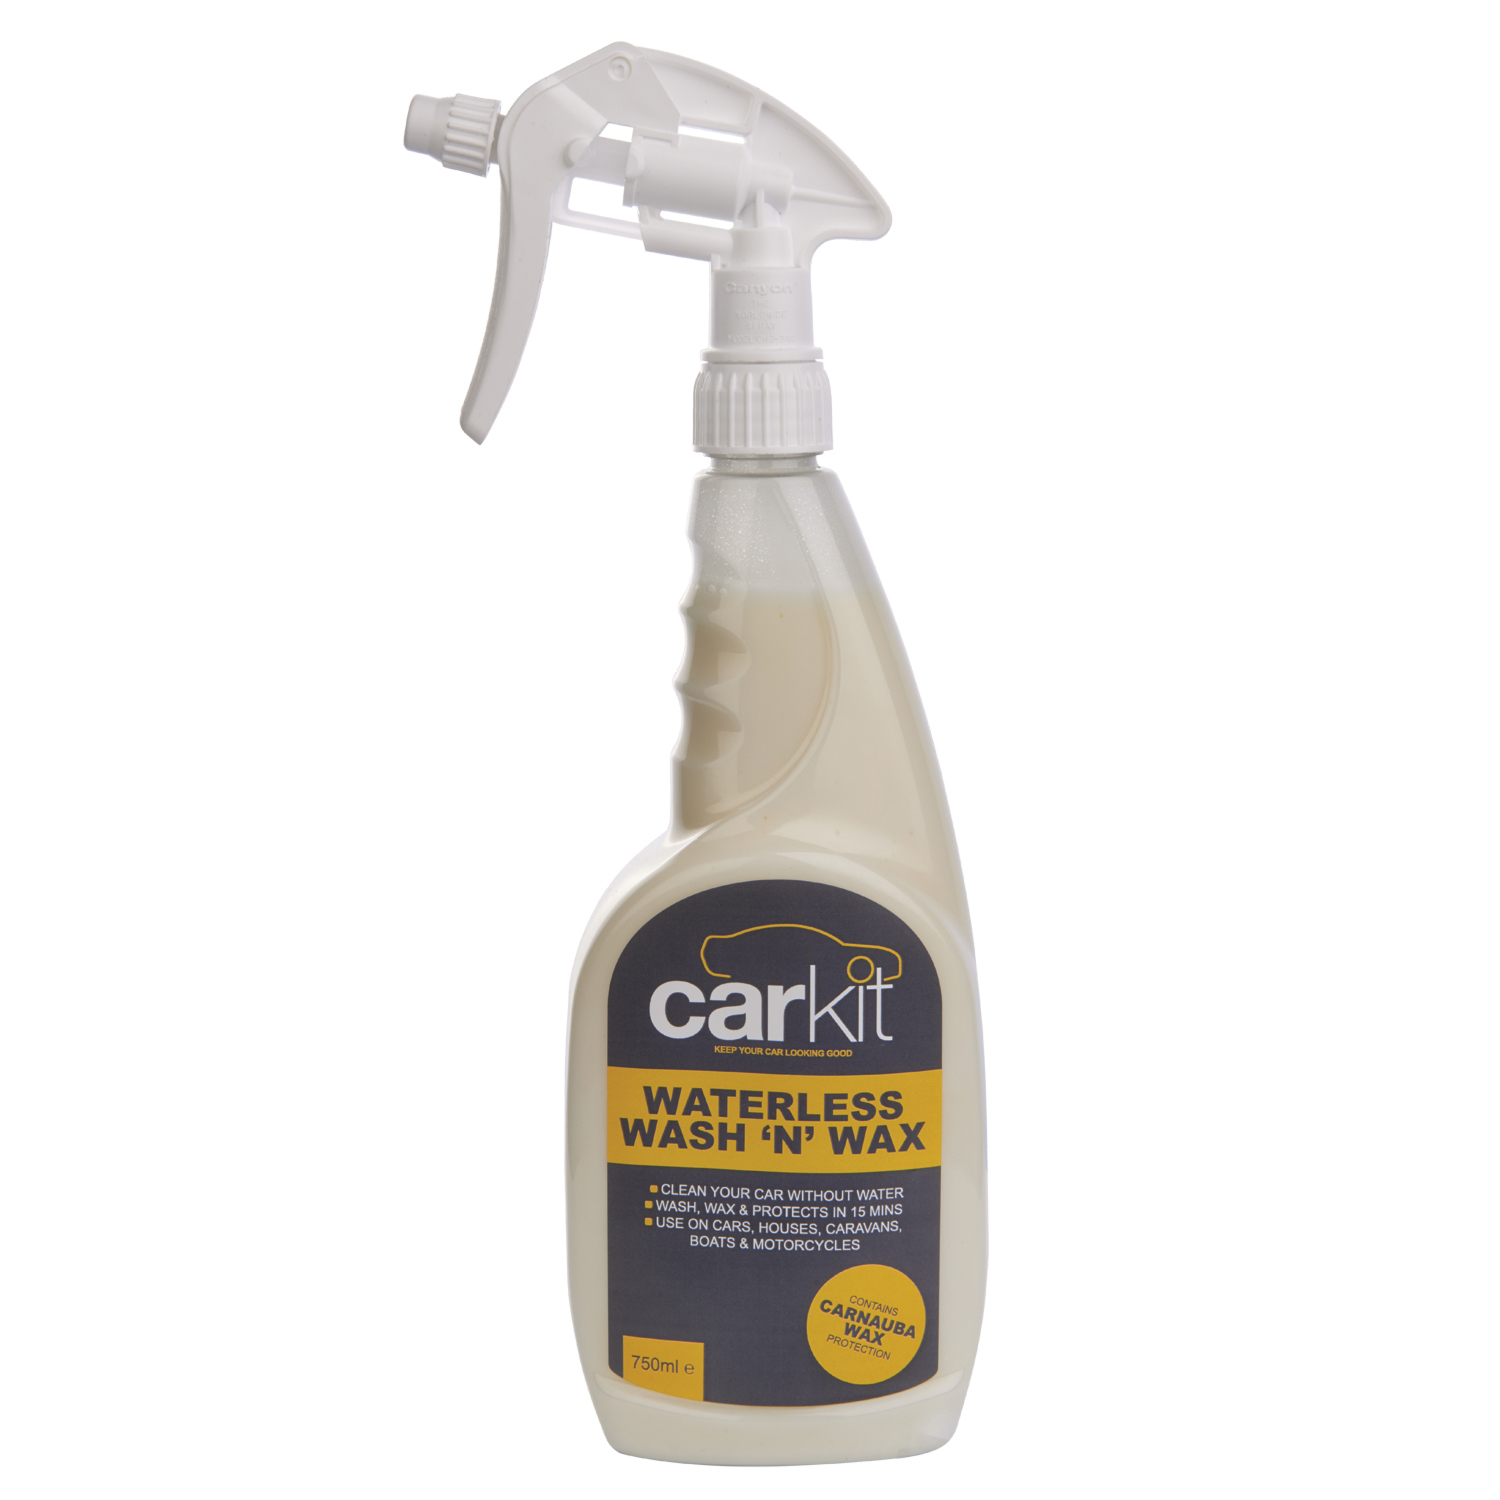 CarKit Waterless Wash 'N' Wax Image